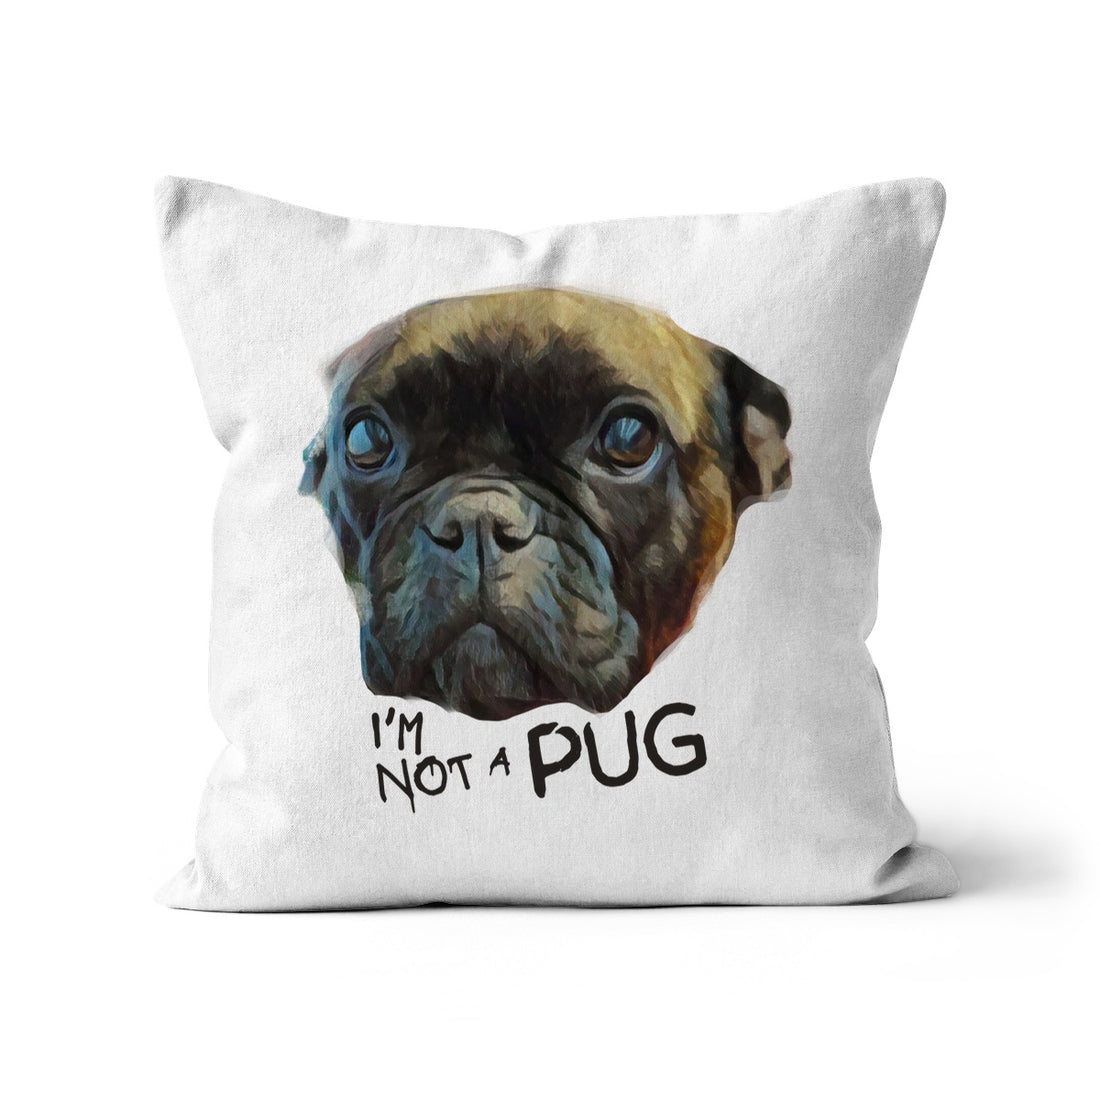 I'm not a PUG Cushion